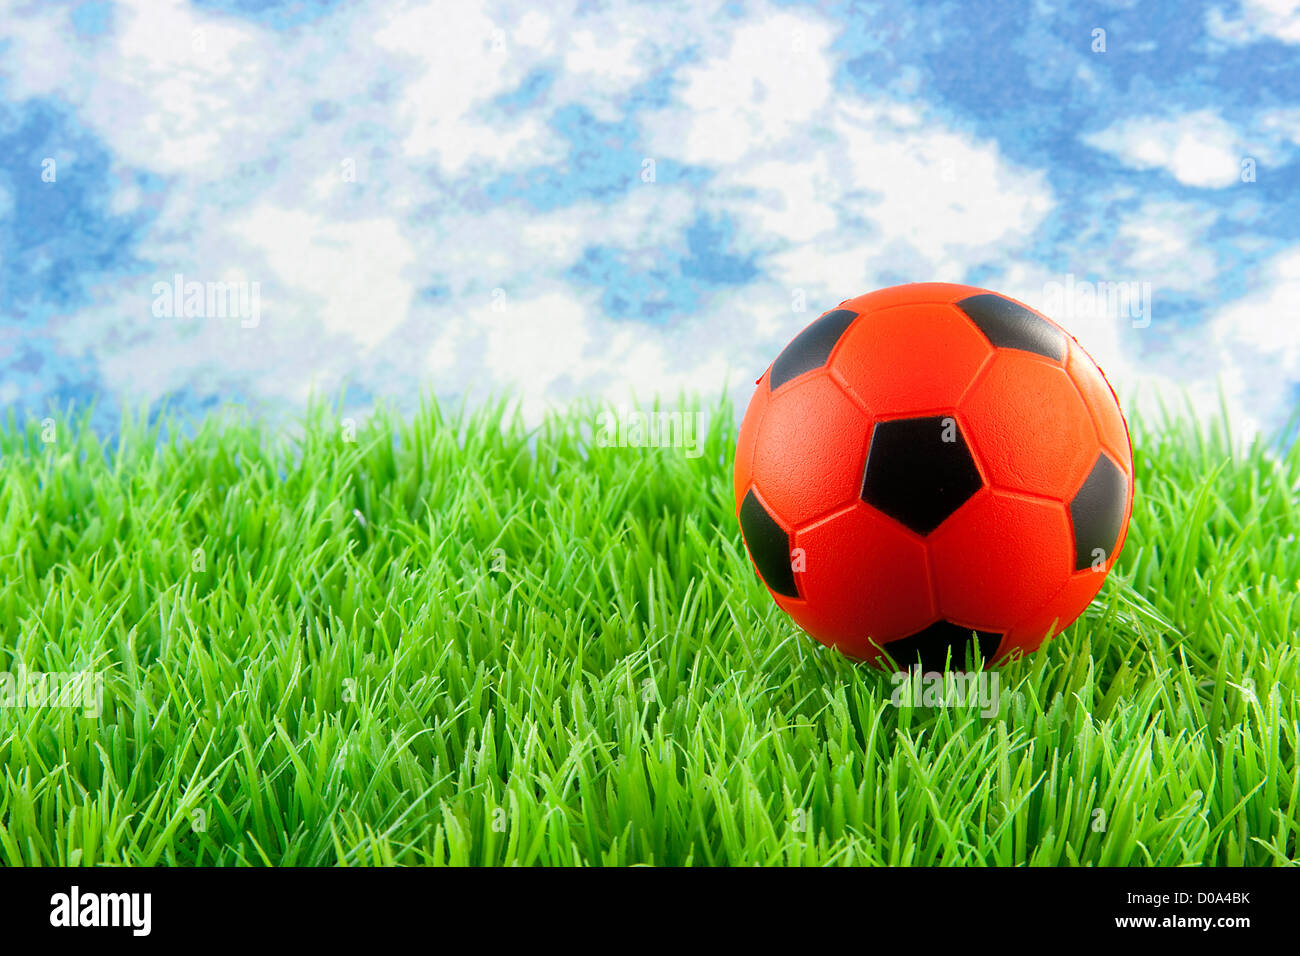 orange Soccer ball on grass against blue cloudy sky Stock Photo